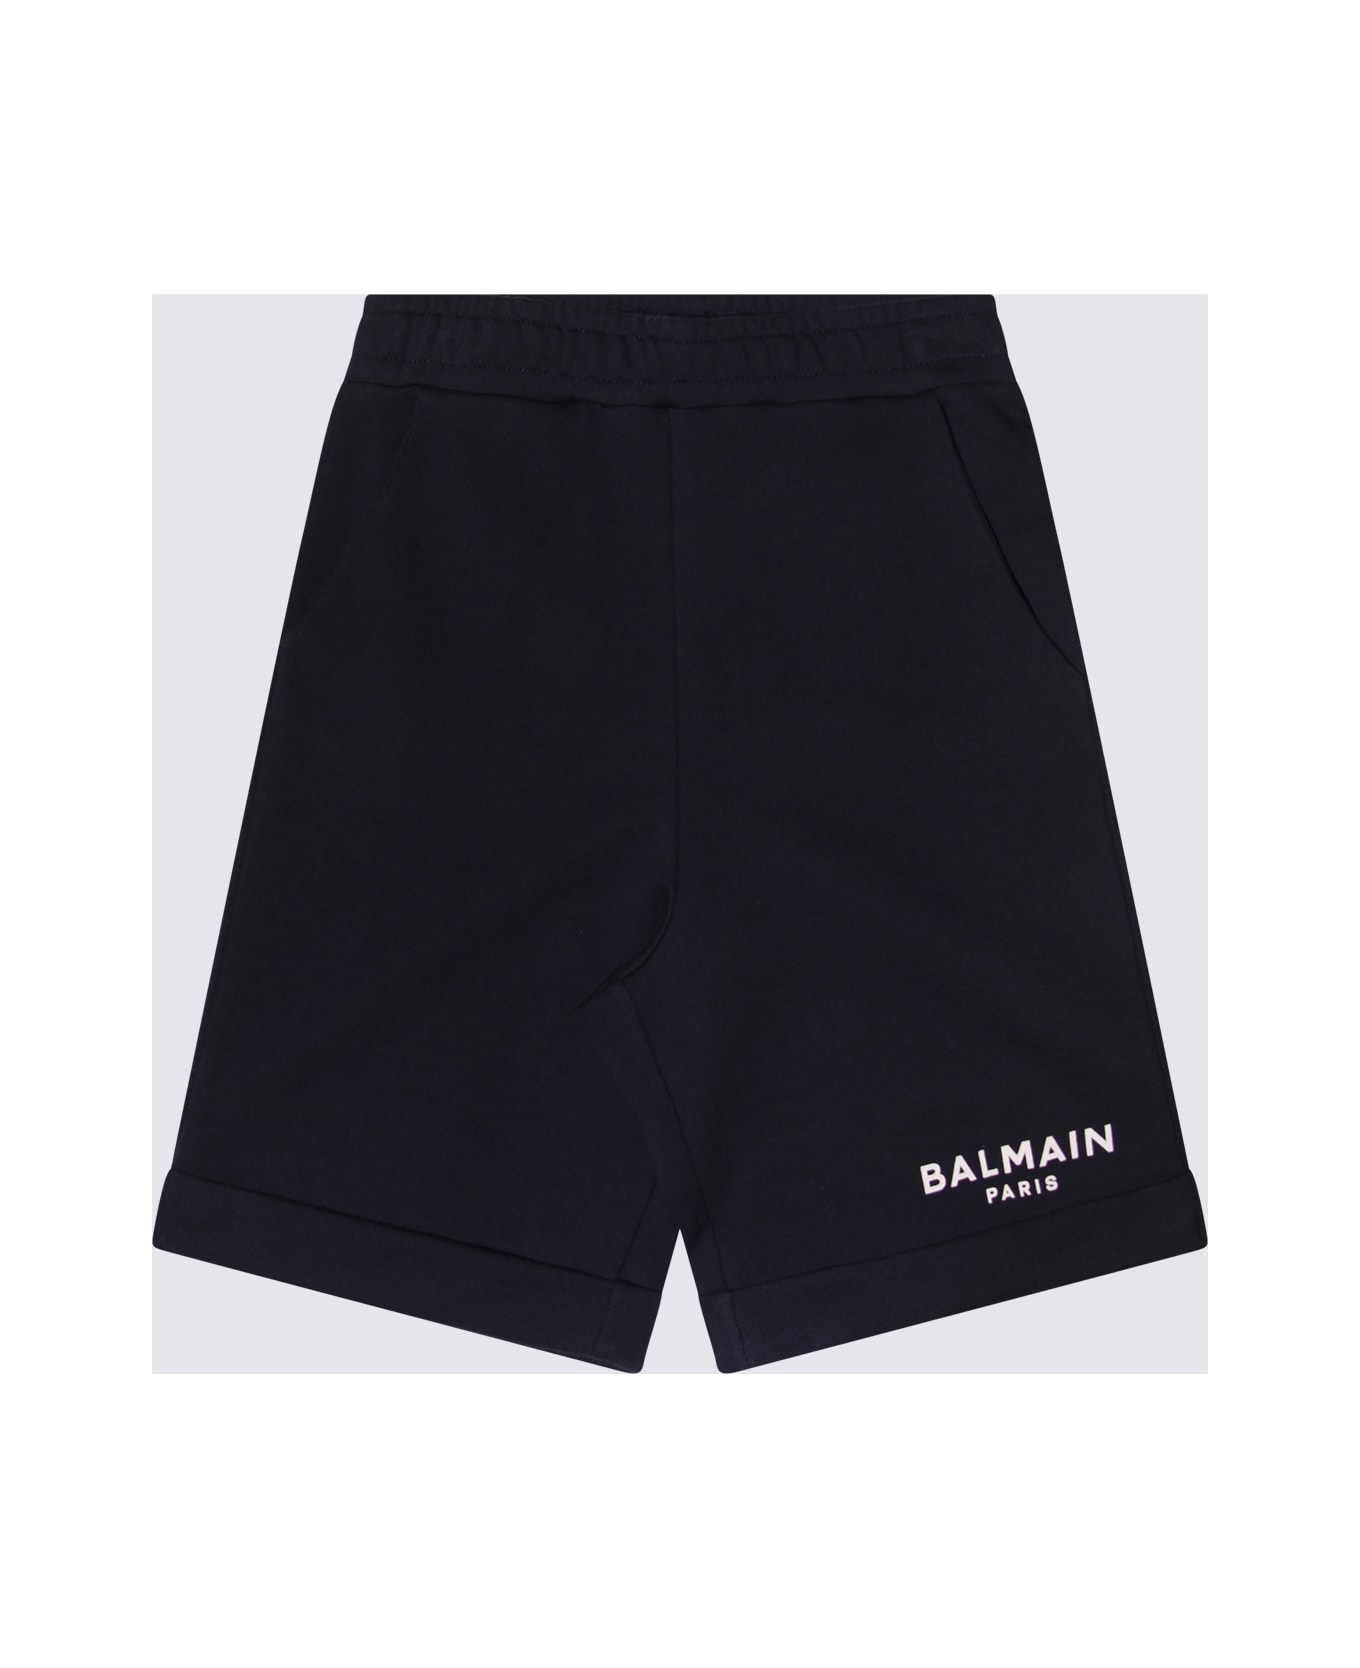 Balmain Navy Blue Cotton Shorts - BLU NAVY/BIANCO